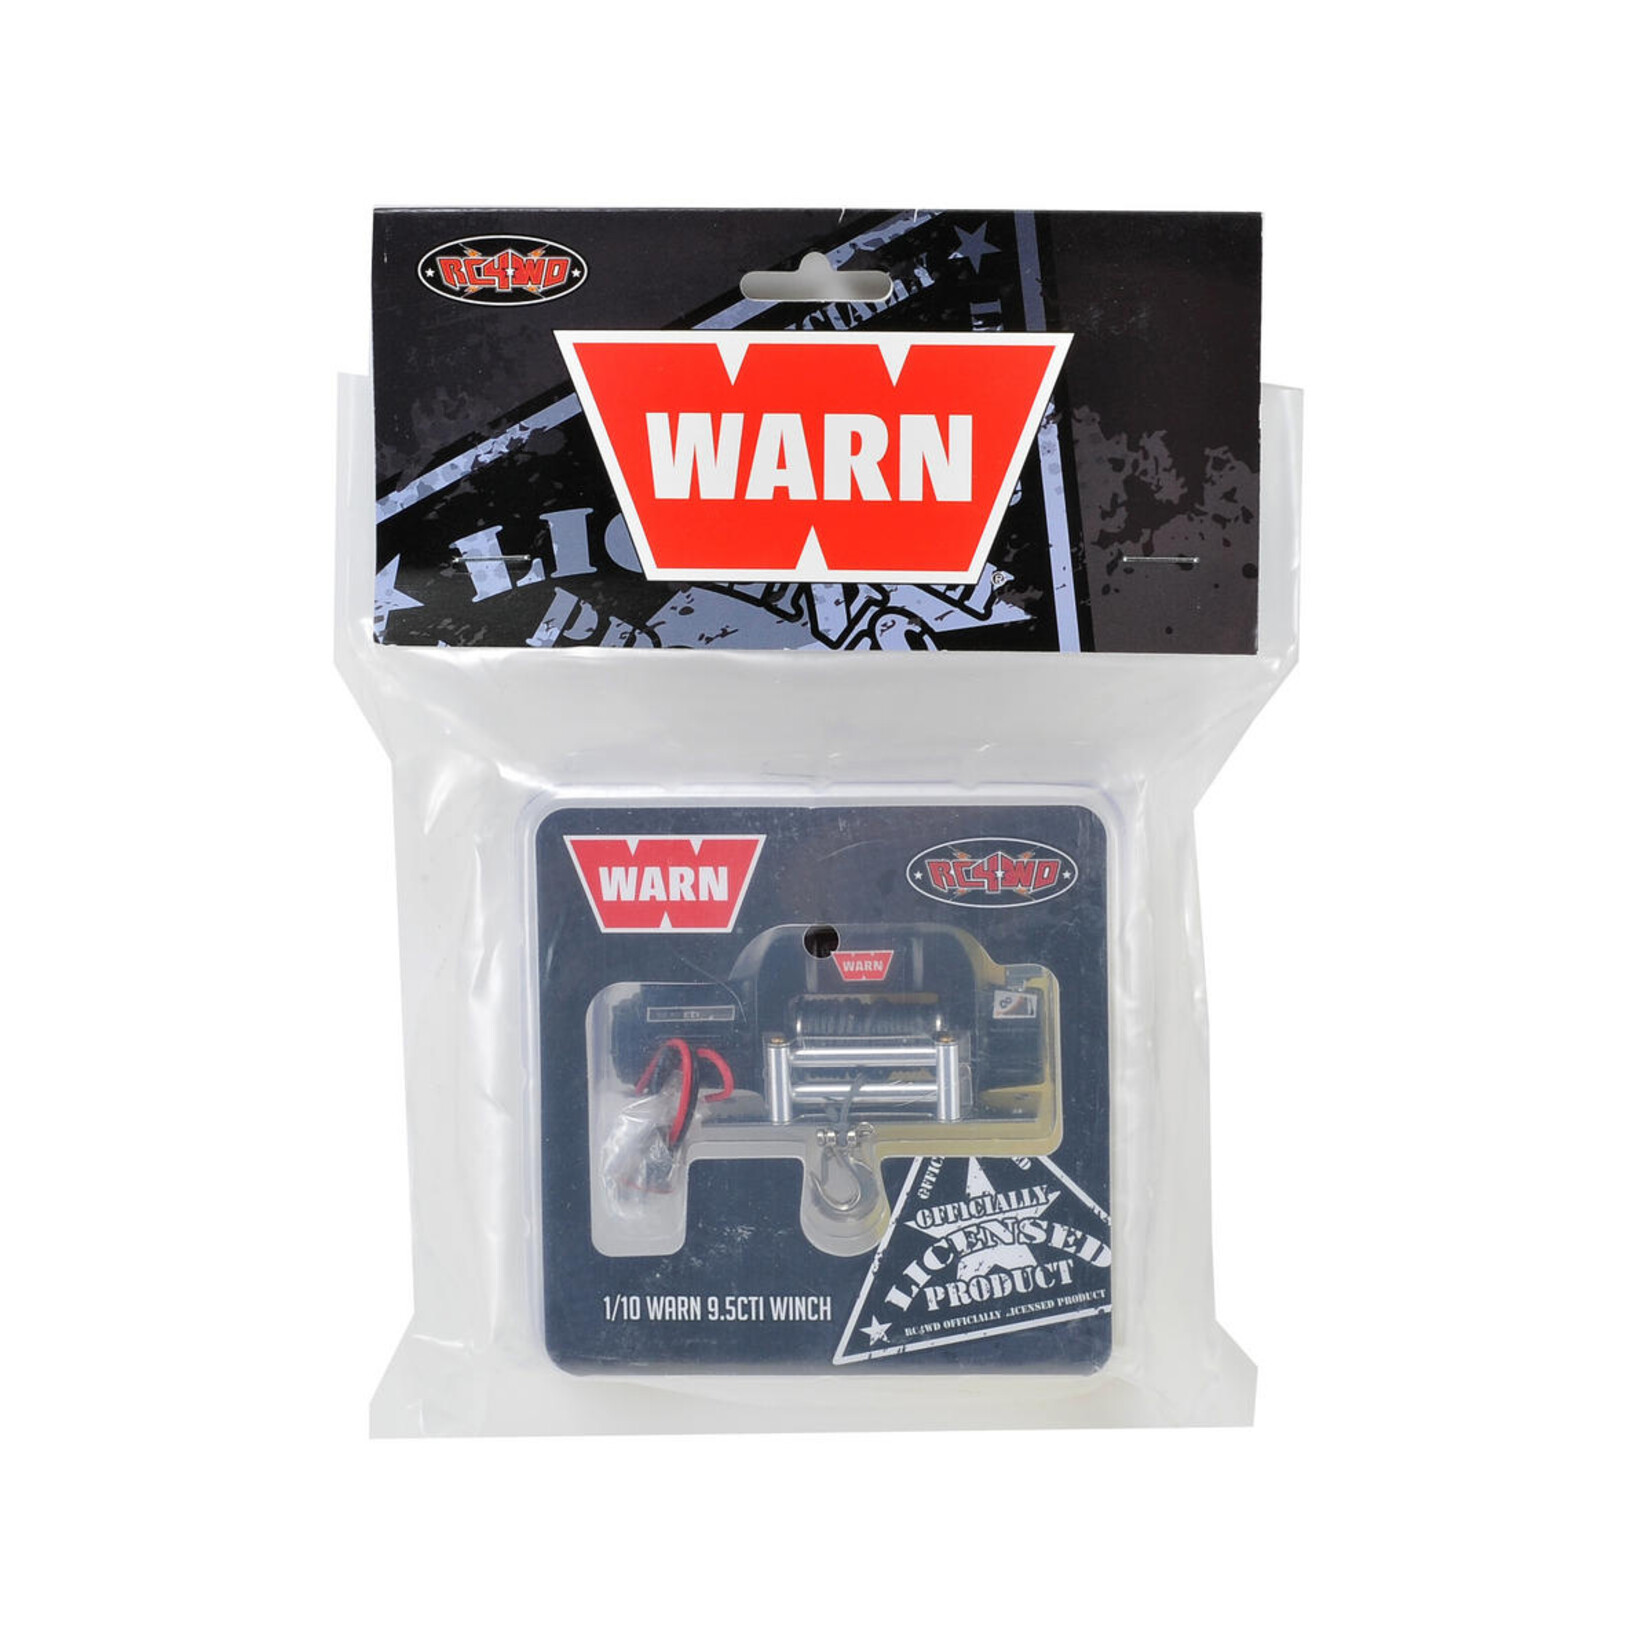 RC4WD RC4WD "Warn" 9.5cti 1/10 Scale Winch (Miniature Scale Accessory) #Z-S1079